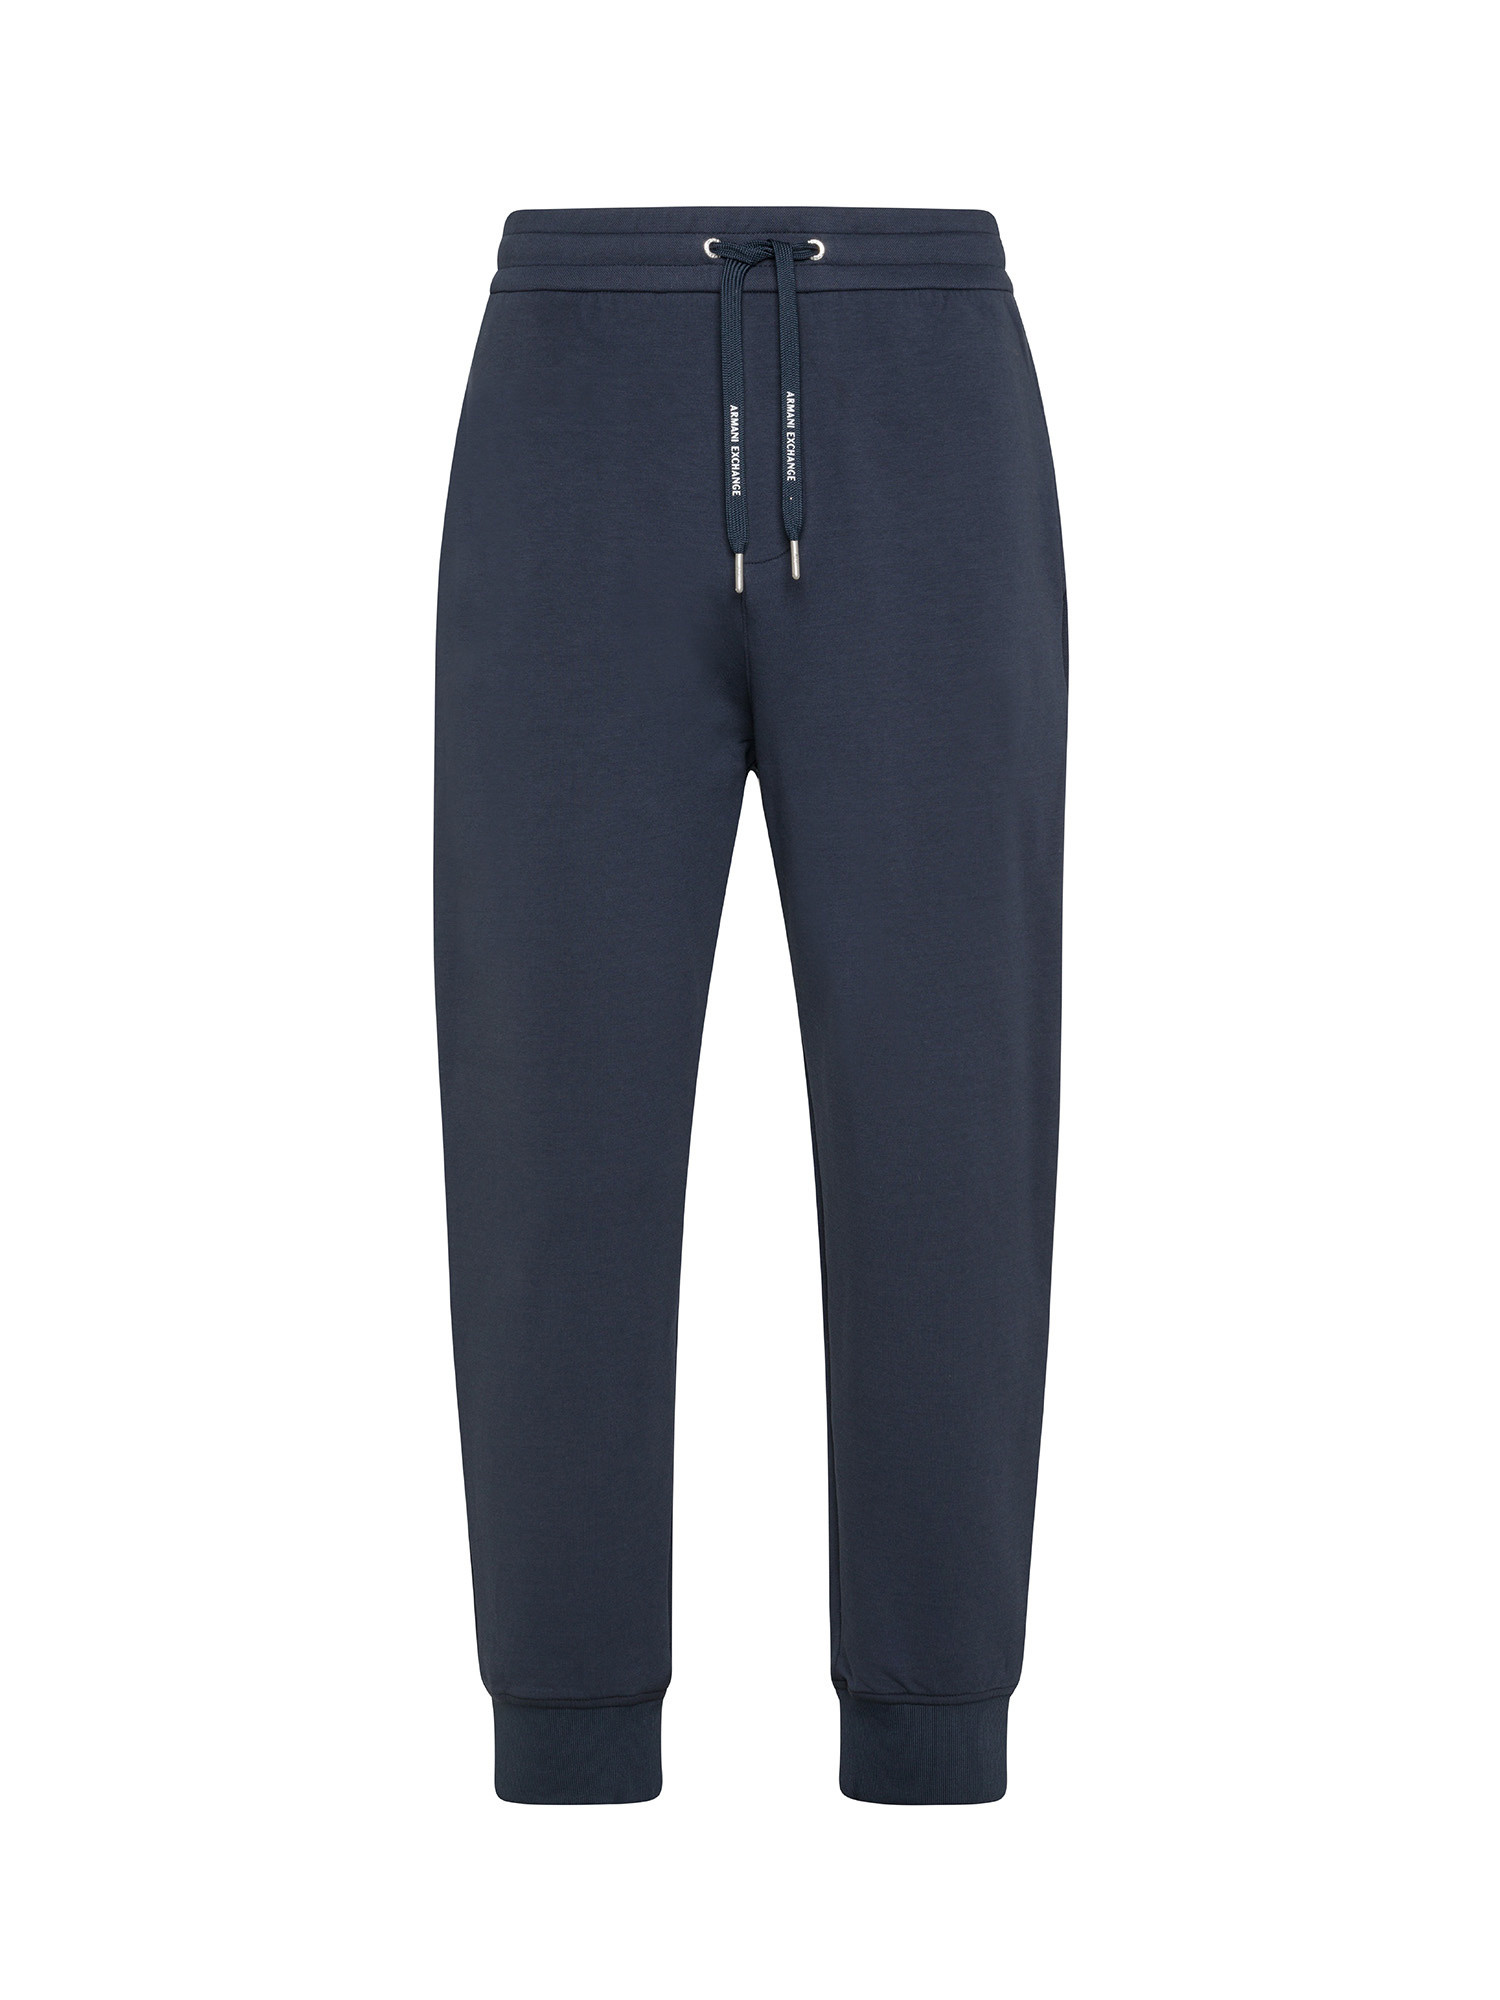 Armani Exchange - Pantaloni sportivi in felpa, Blu scuro, large image number 0